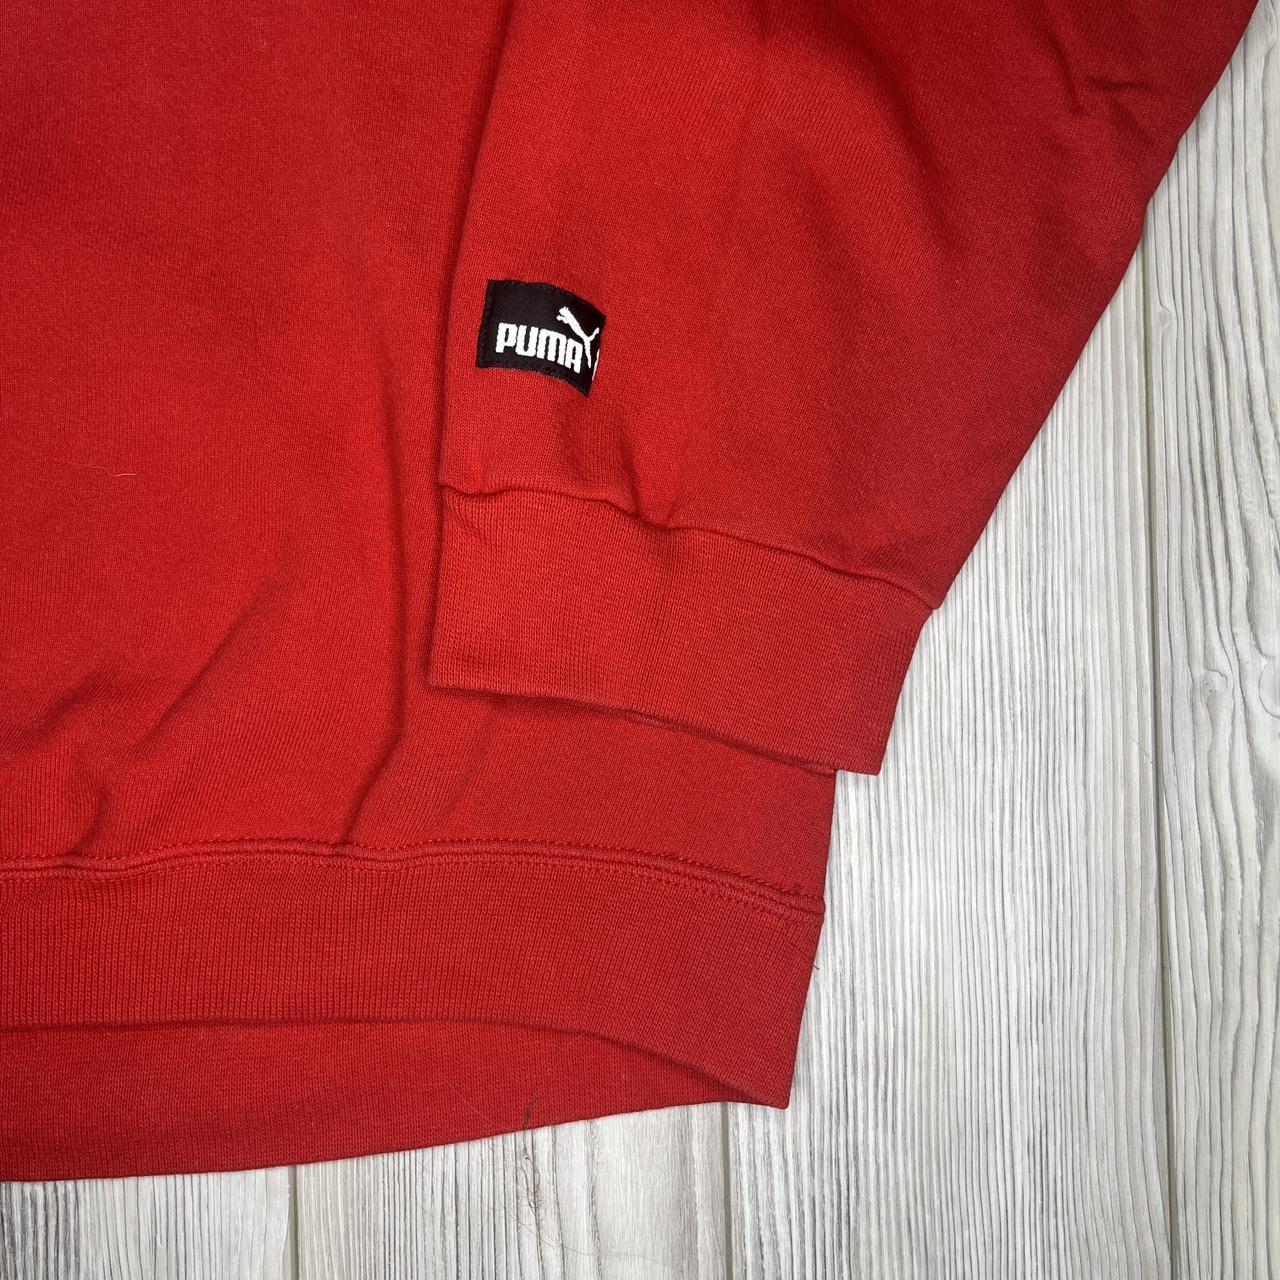 Puma Men's Red and White Sweatshirt | Depop